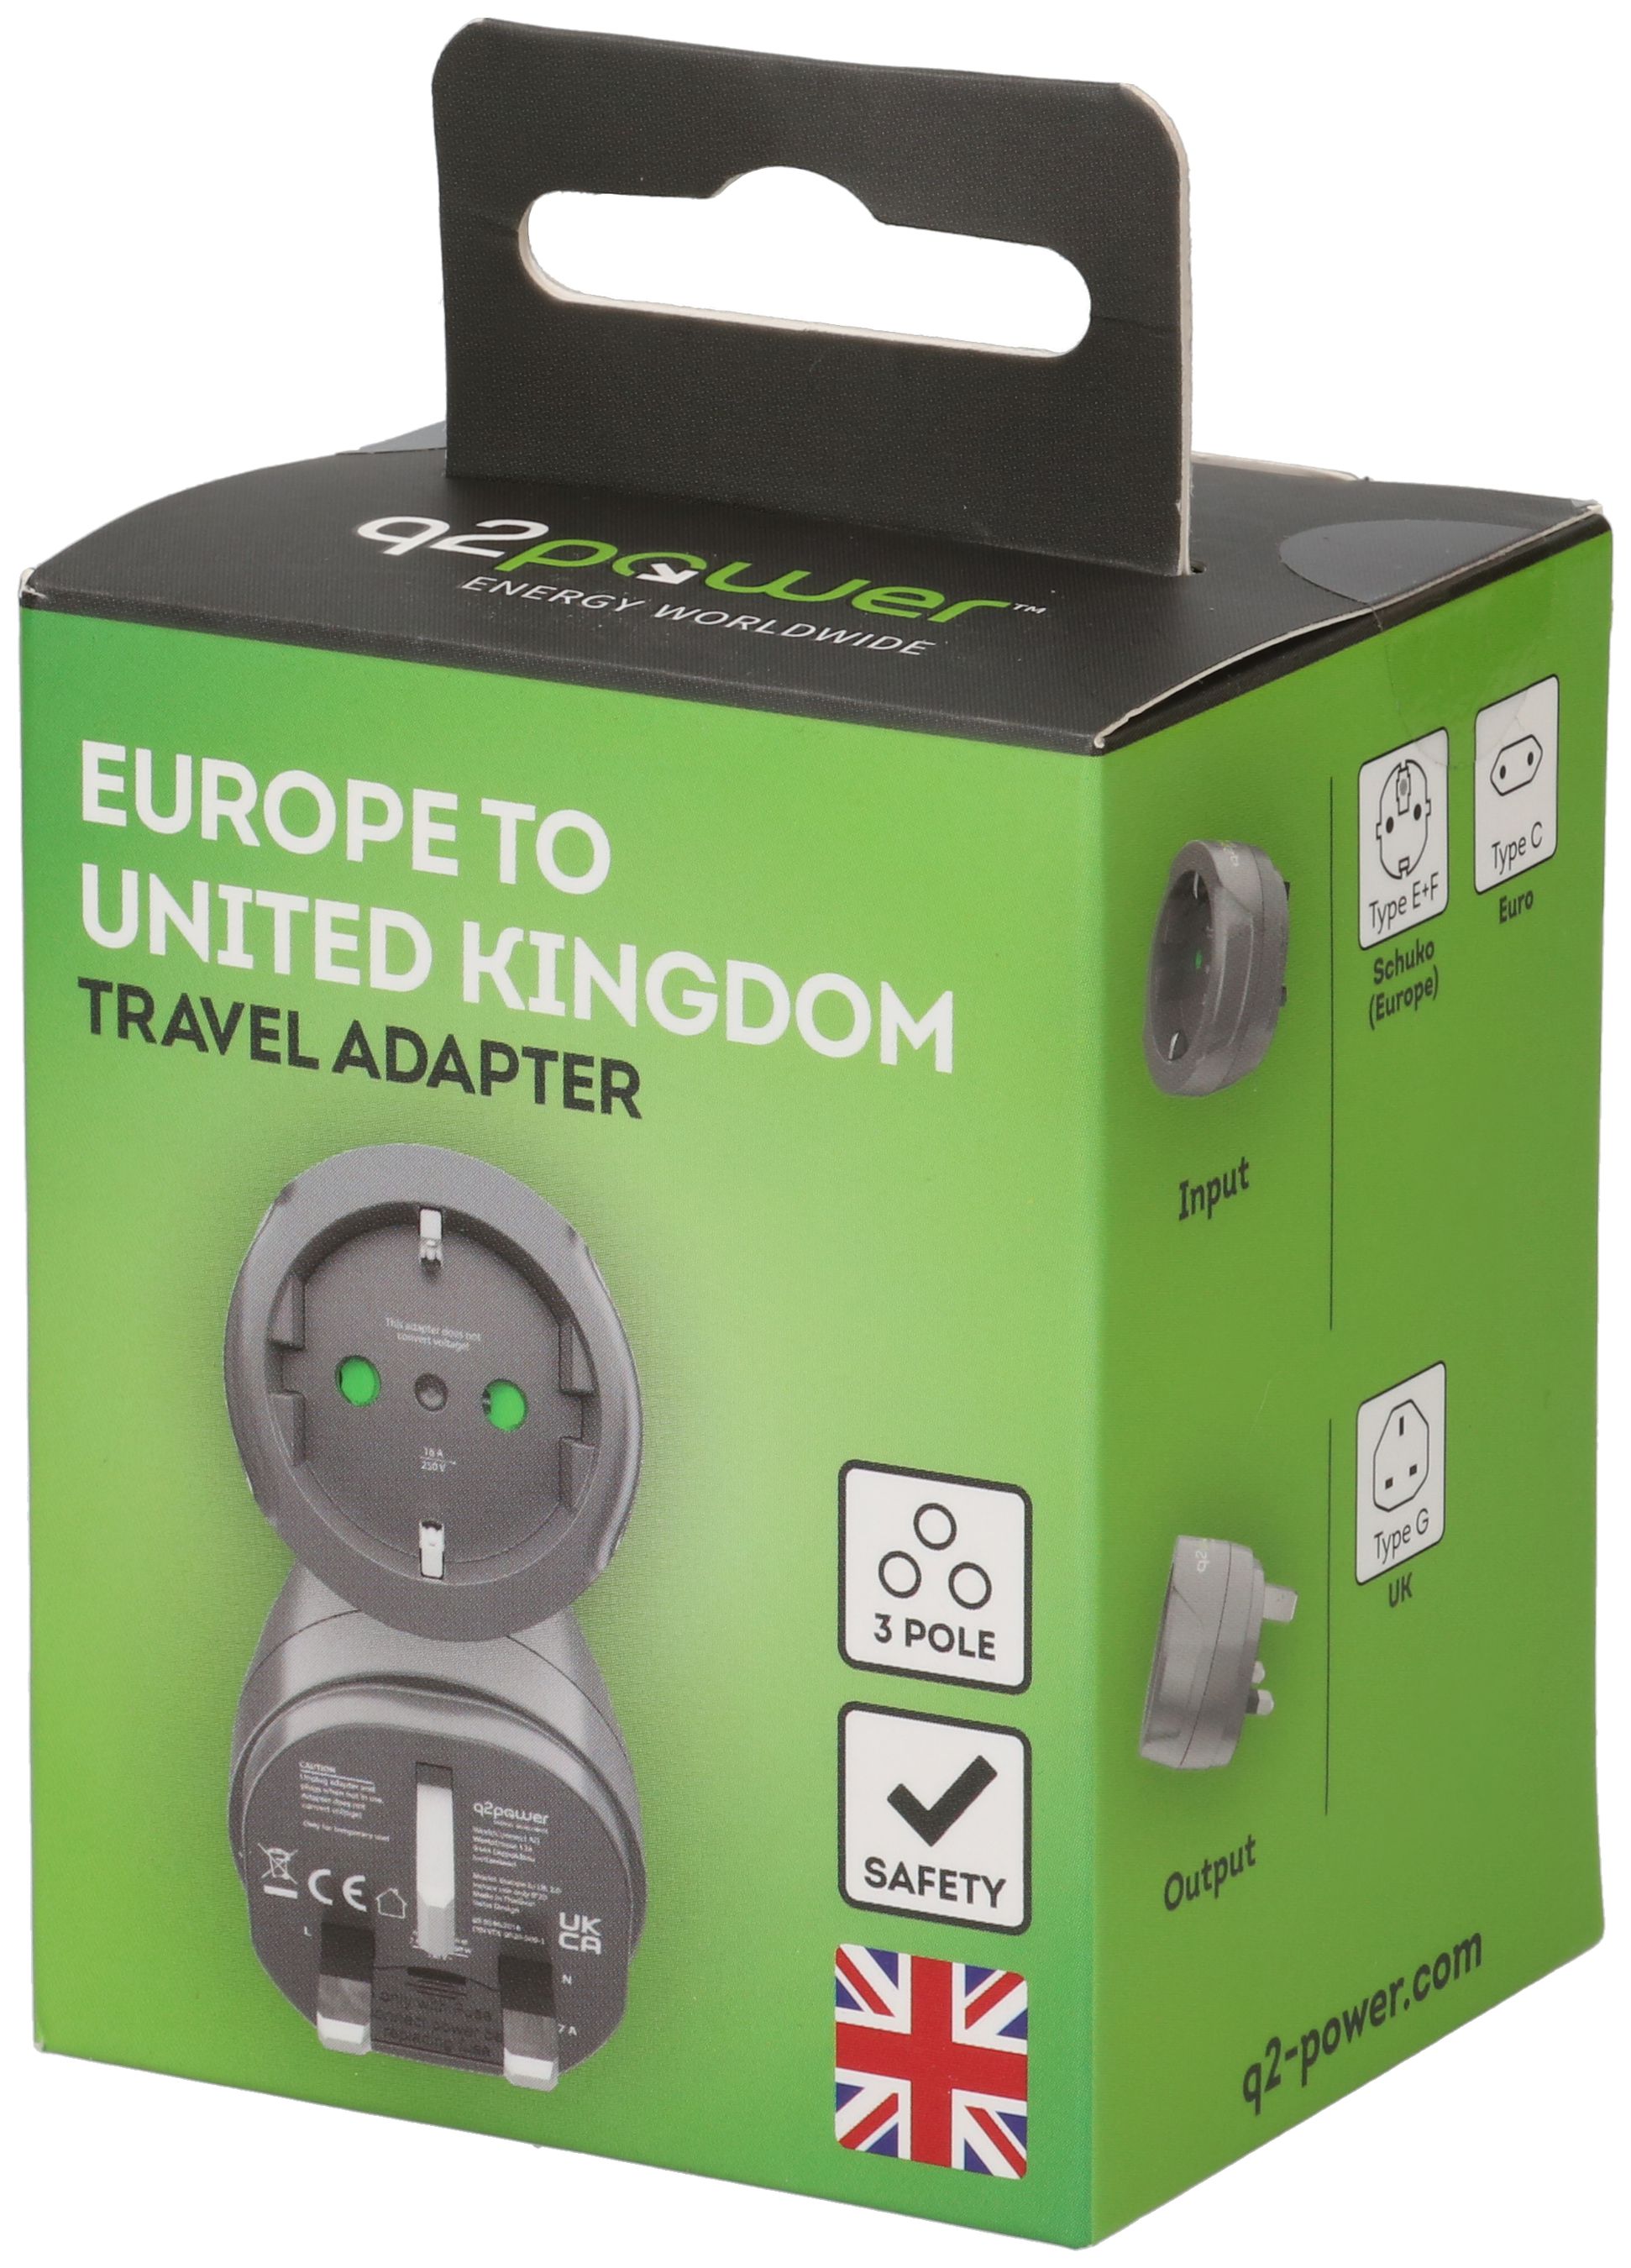 Reiseadapter Europe to United Kingdom